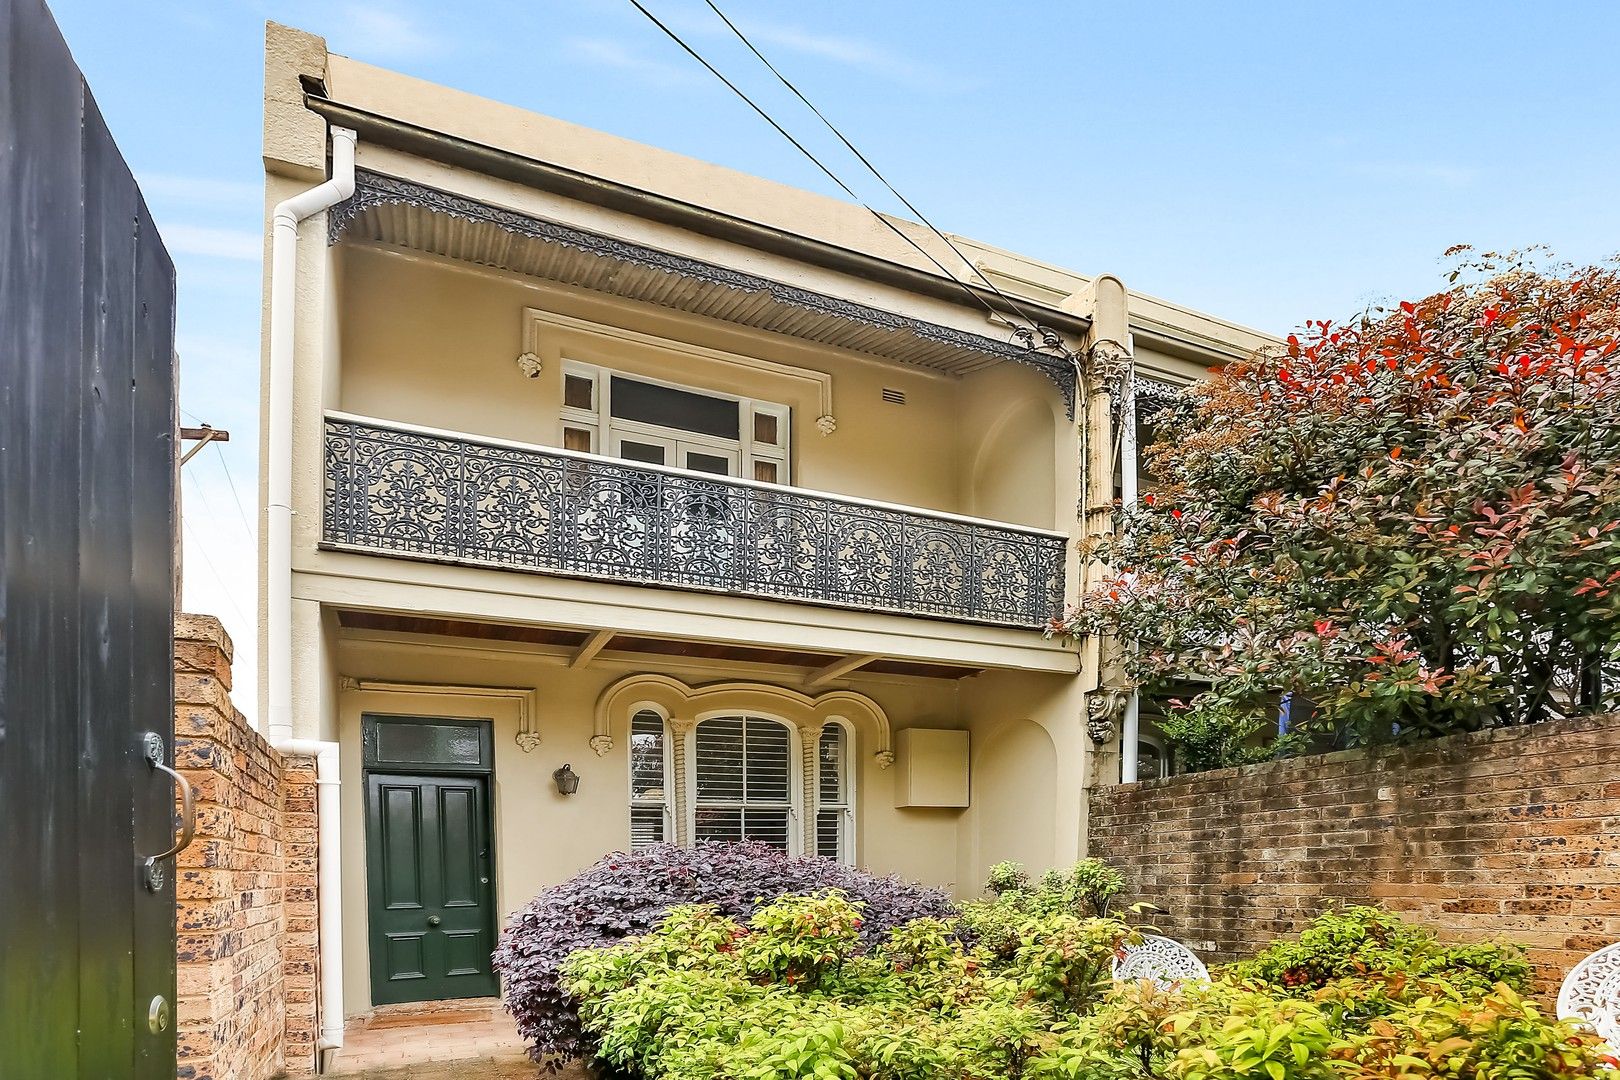 3 bedrooms House in 353 Balmain Road LILYFIELD NSW, 2040